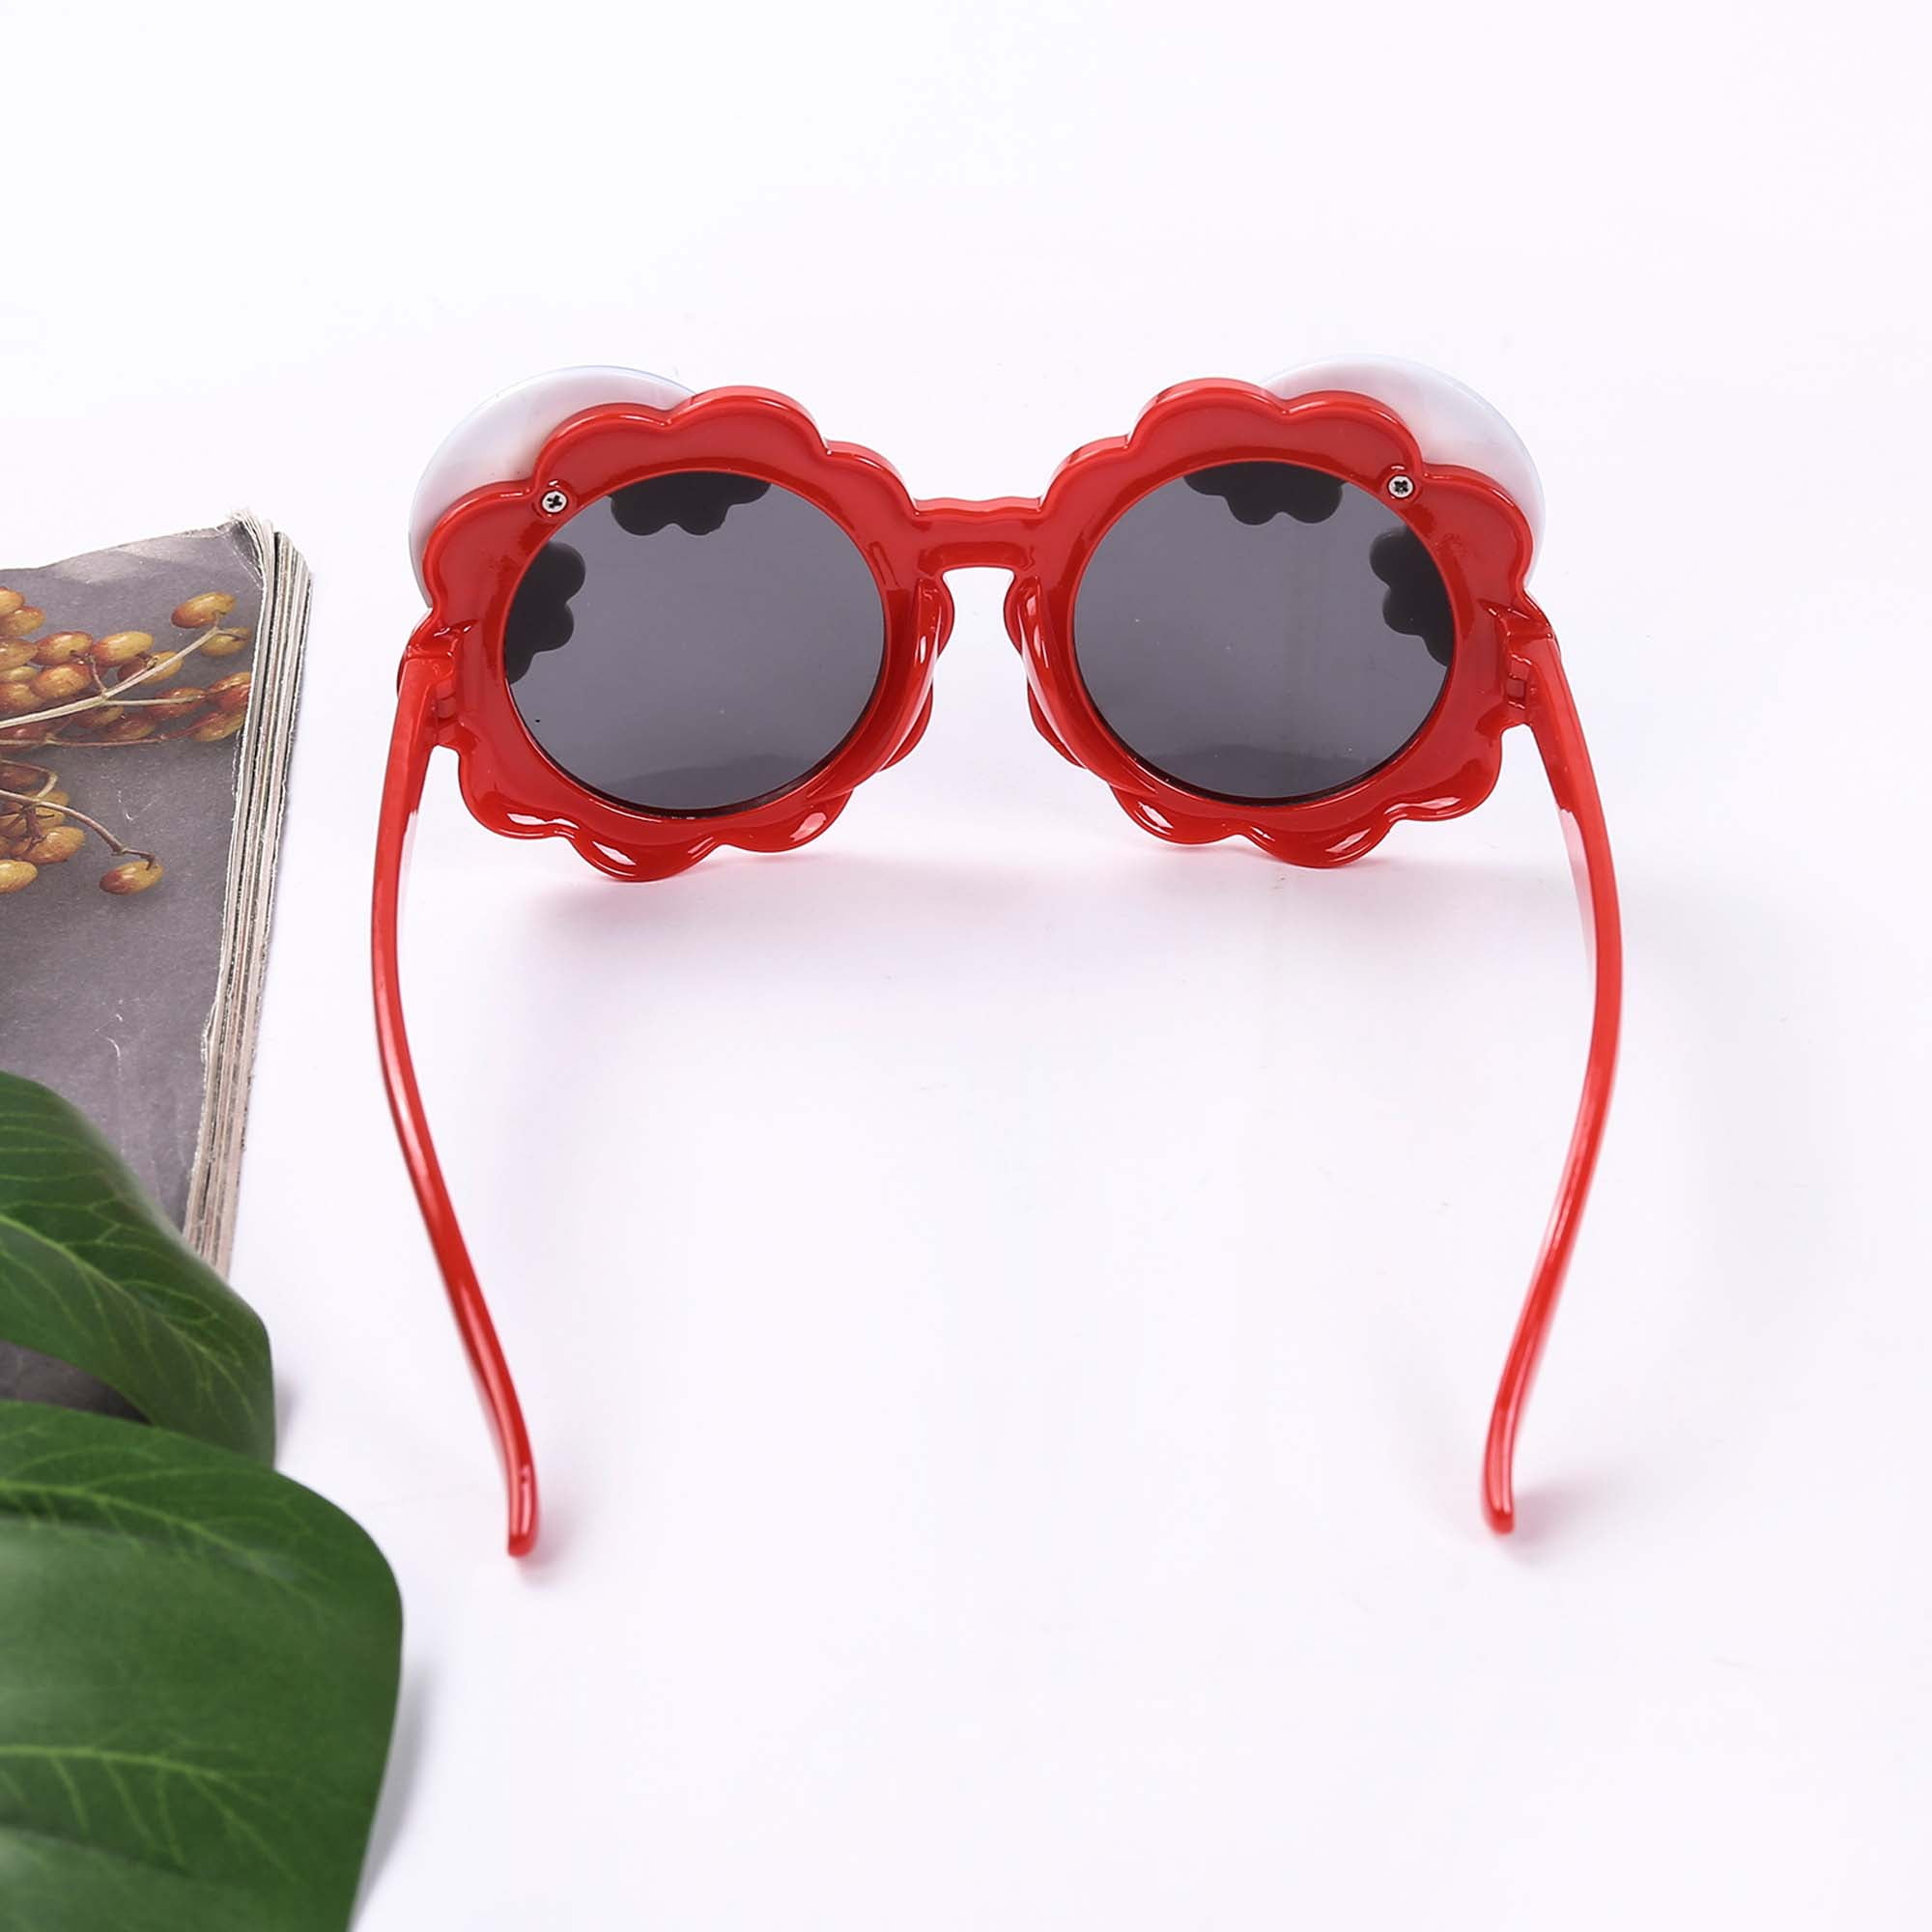 Licupiee Kids Beach Sunglasses Rainbow Flower Shape UV400 Protection Sunglasses, Kids Unisex, Size: One size, Yellow